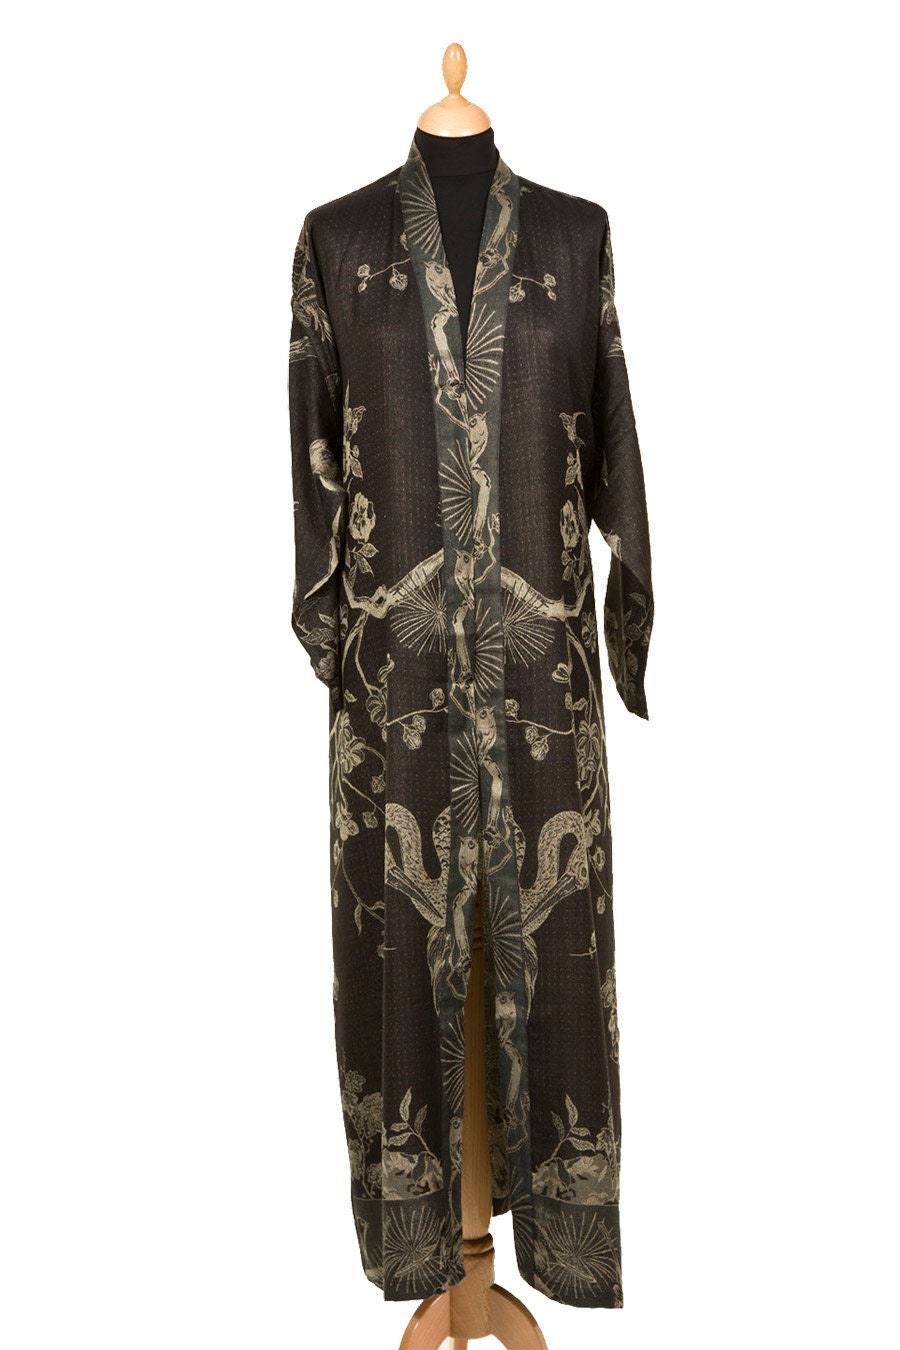 Dressing Gown for Women in Black Cashmere Silk Bath Robe | Etsy